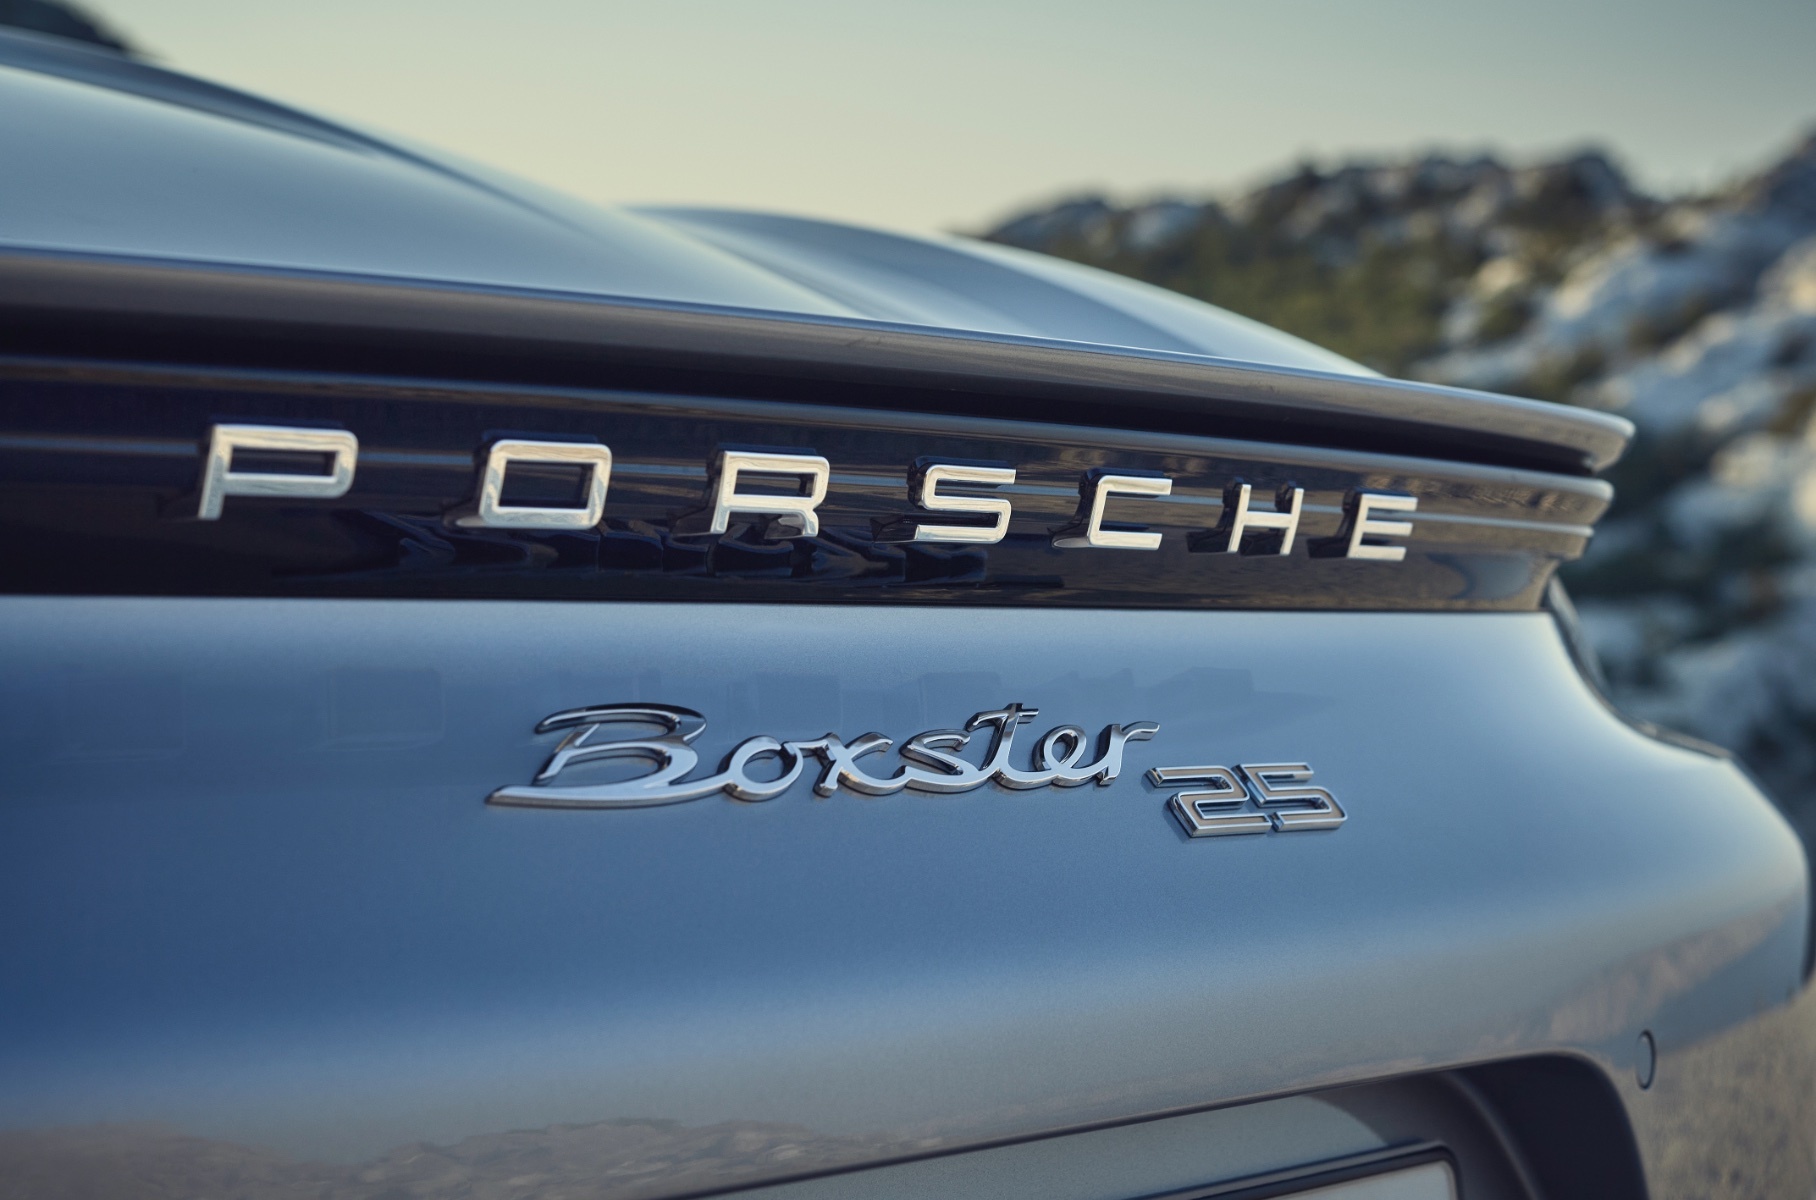 Porsche Boxster 25 Years отпразднует 25-летие модели